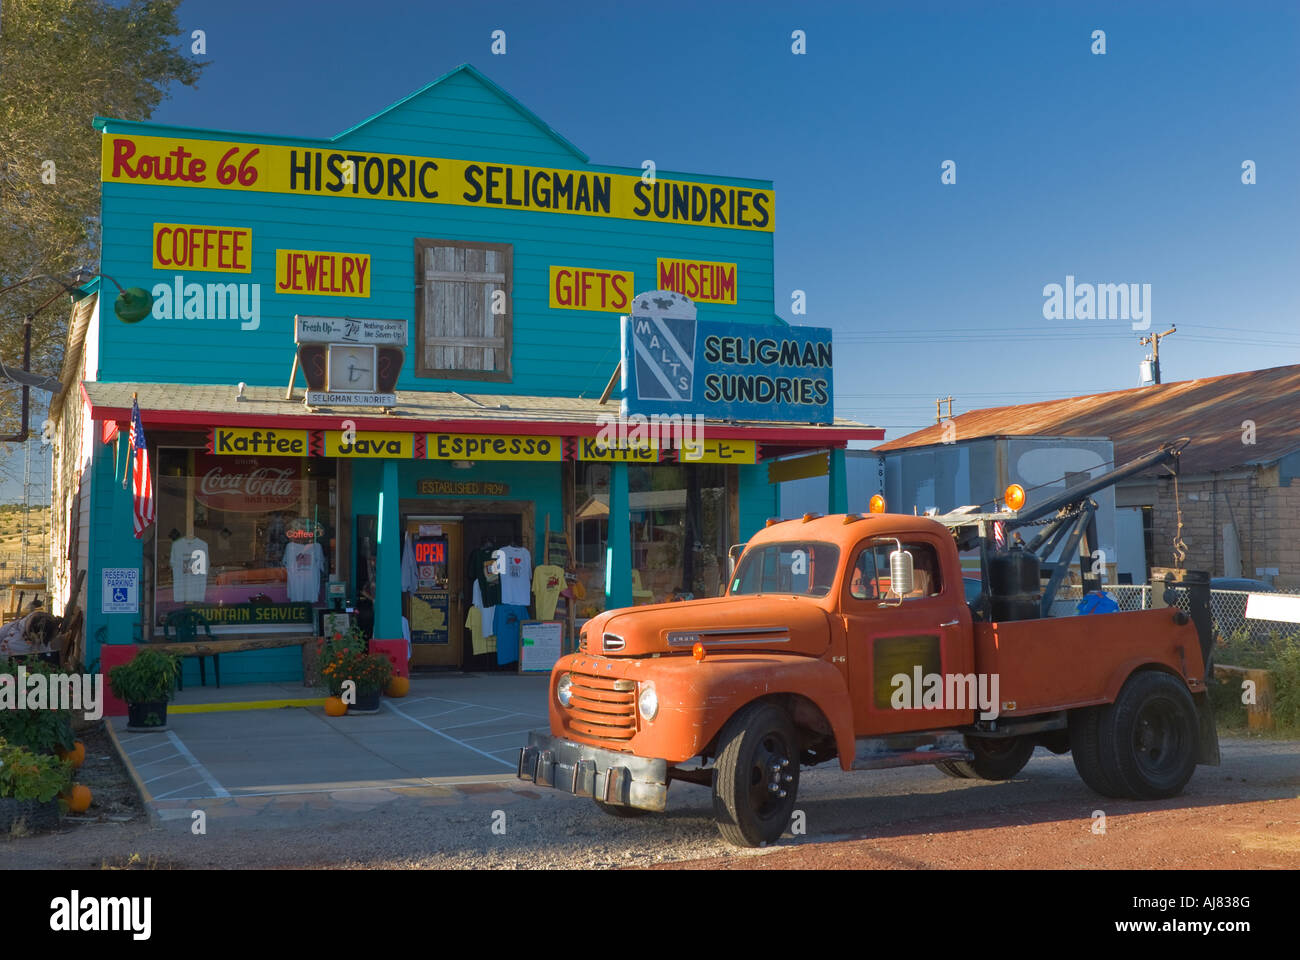 Seligman Sundries gift shop at Route 66 in Seligman Arizona USA Stock Photo